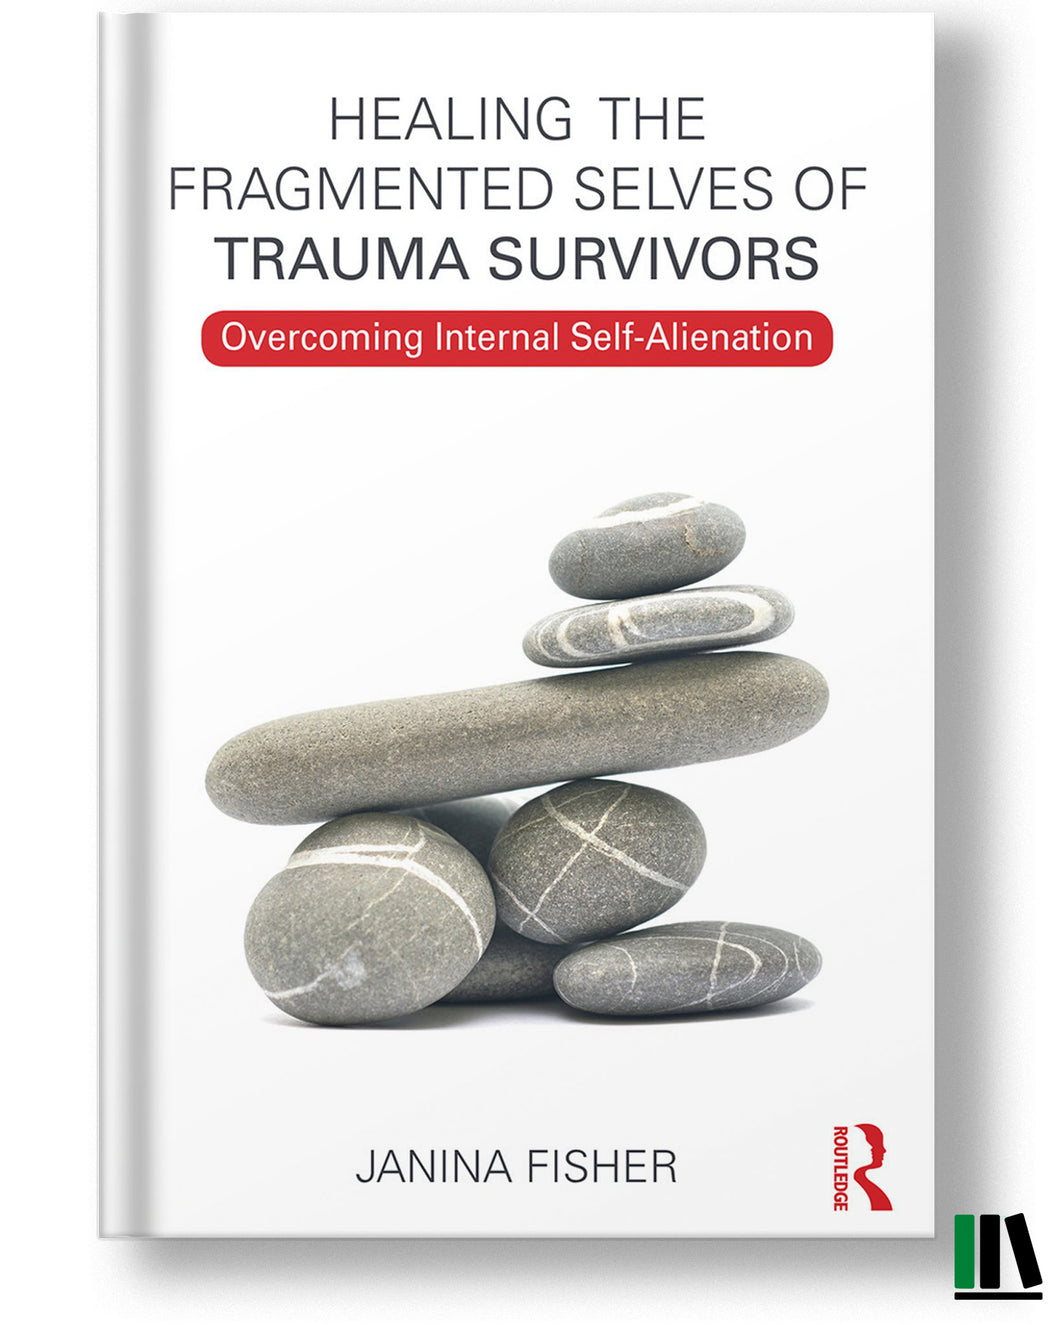 Healing the Fragmented Selves of Trauma Survivors: Overcoming Internal Self-Alienation